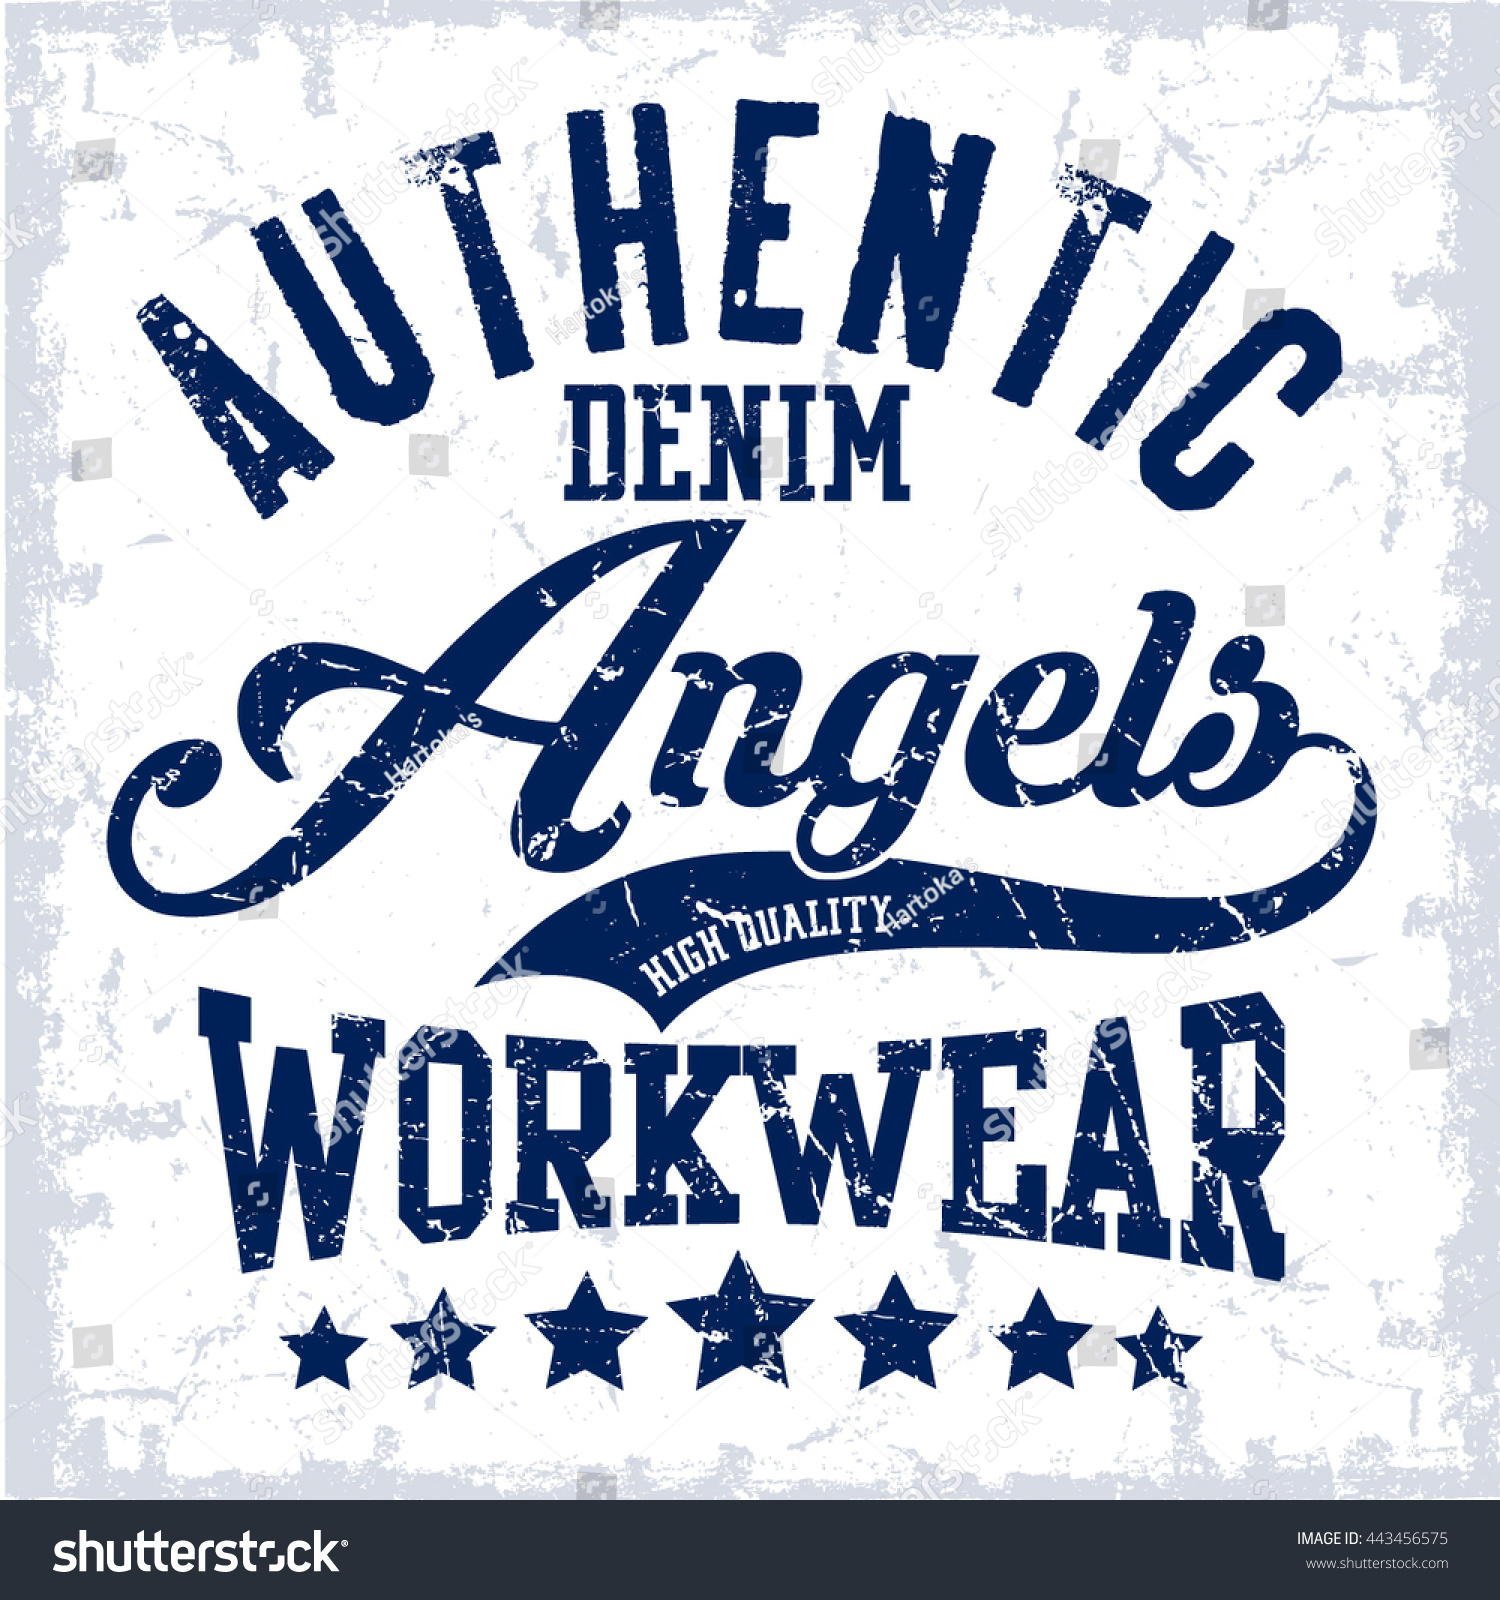 Premium Vector  Original tshirt print vintage clothes design with grunge  authentic denim apparel typography